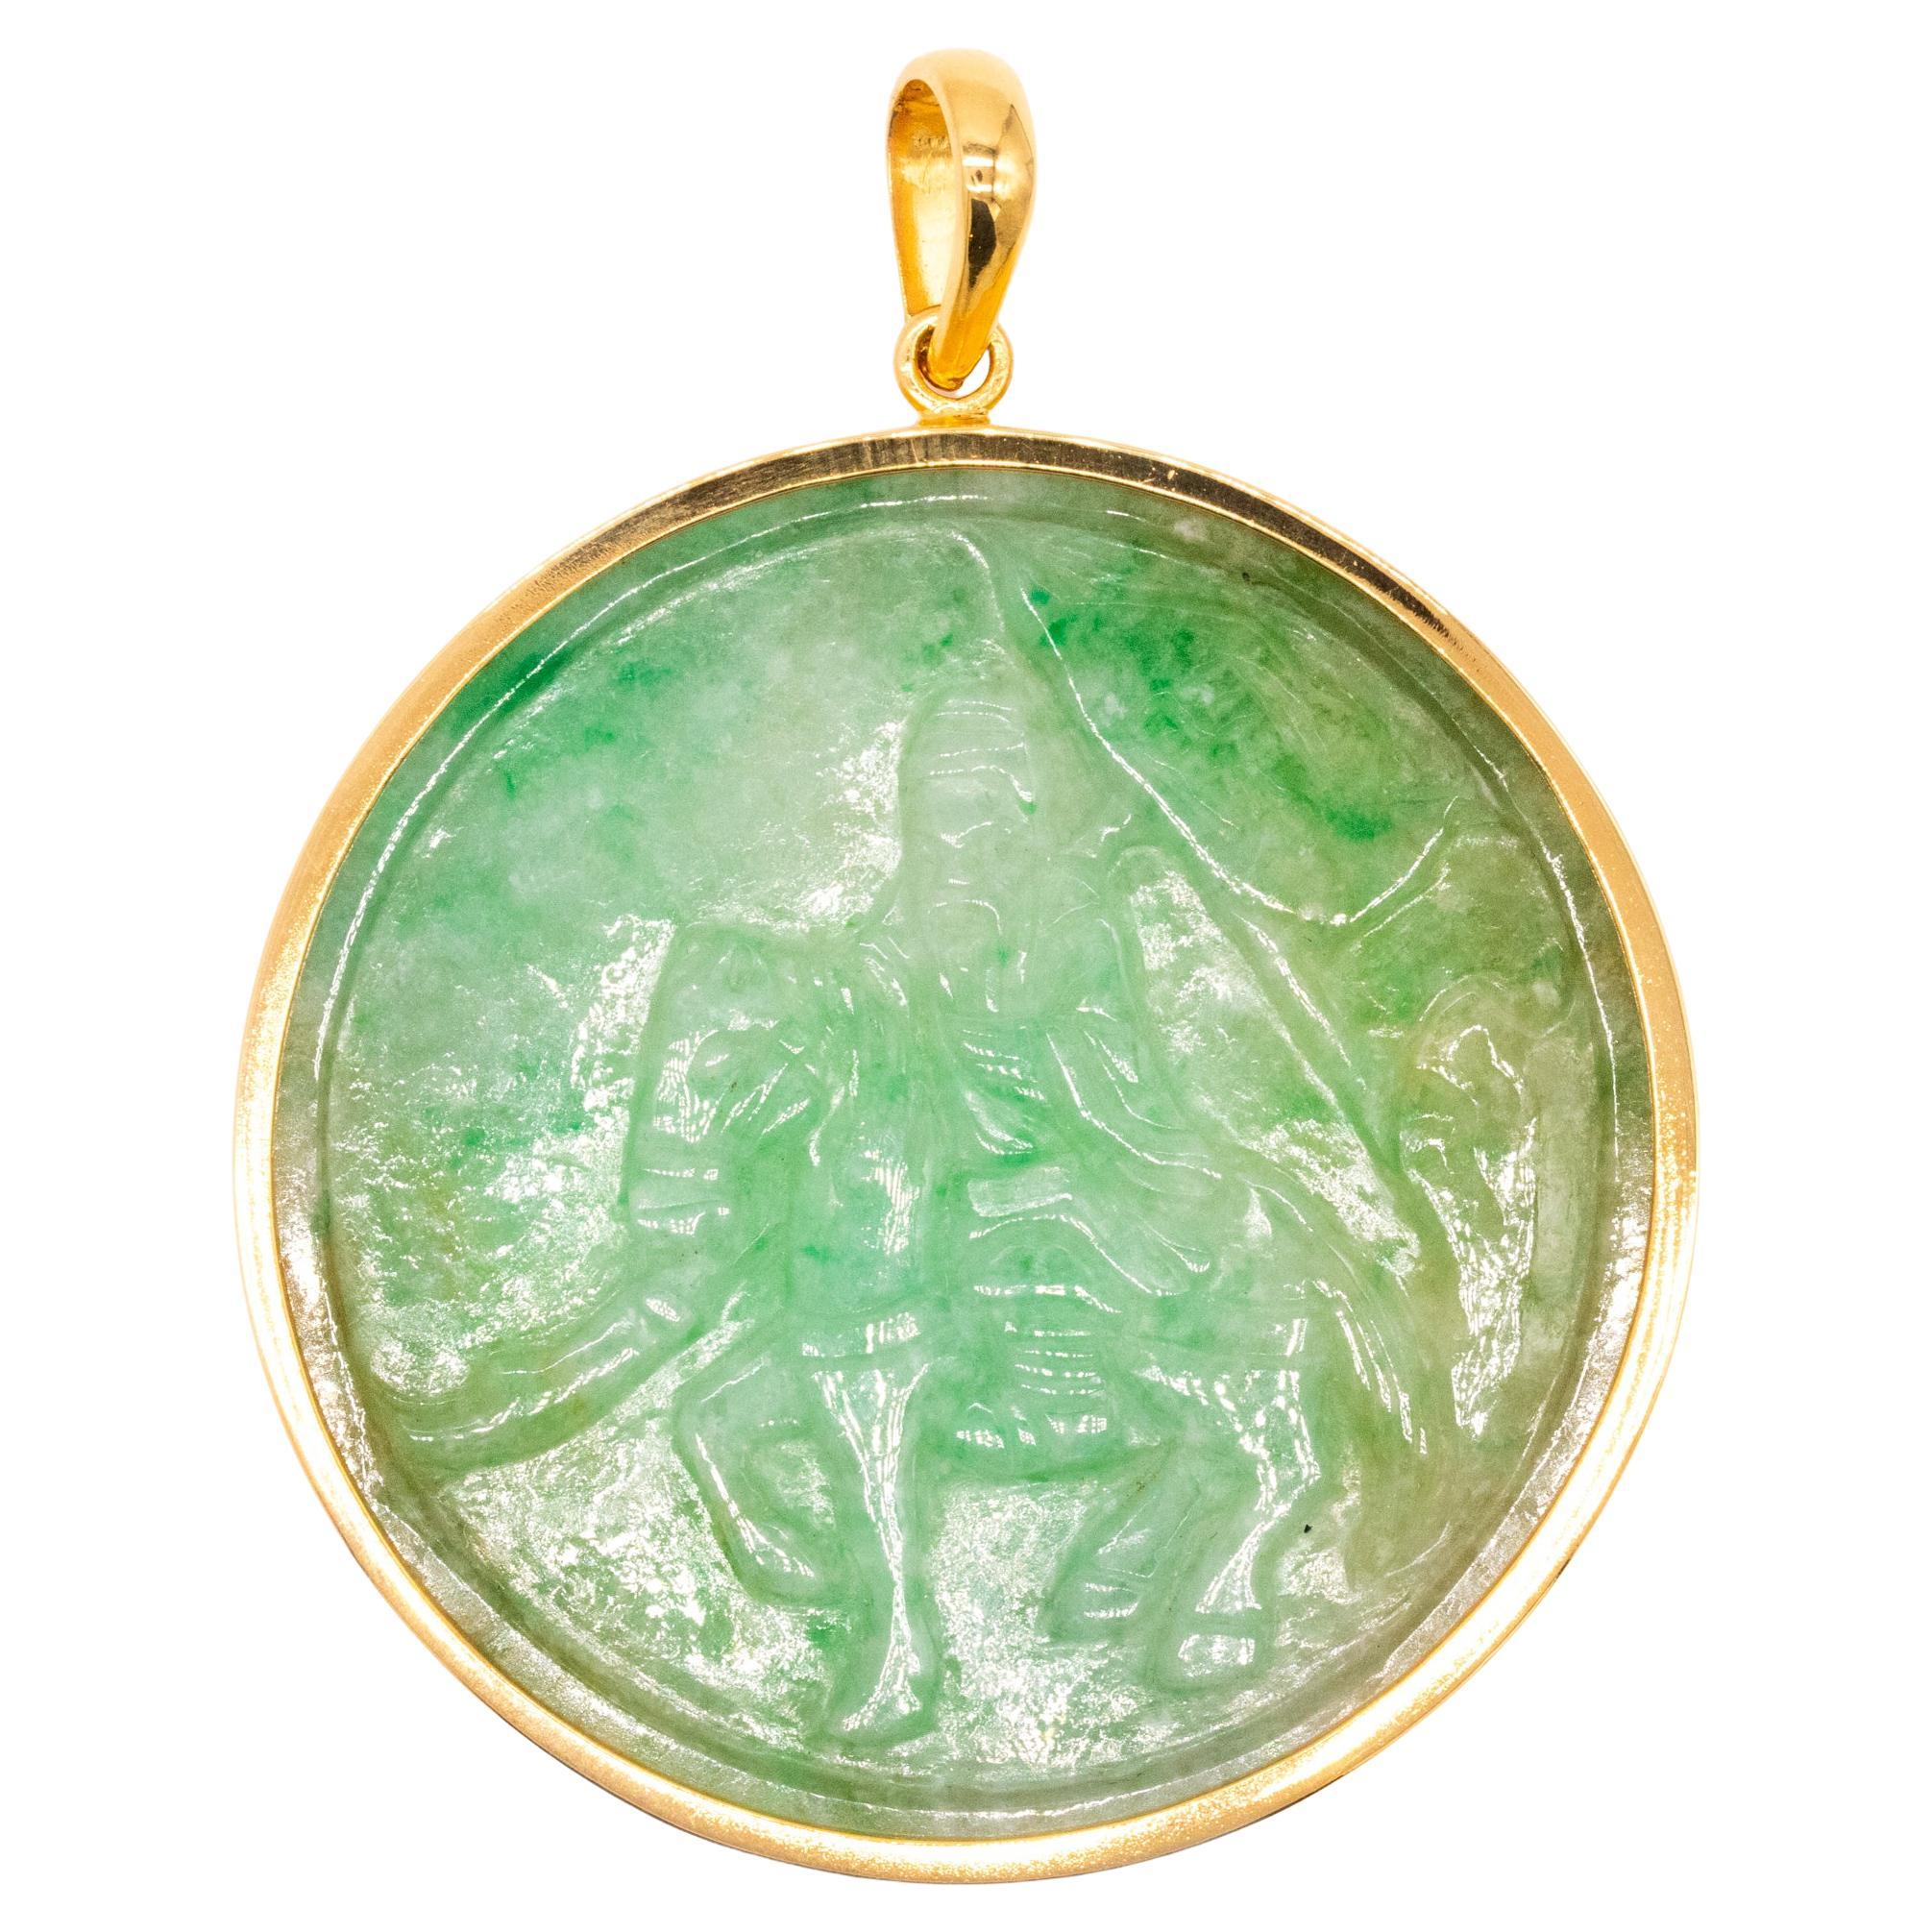 GIA Certified Jadeite Green Jade Pendant in 18Kt Yellow Gold 102.27 Cts Gemstone